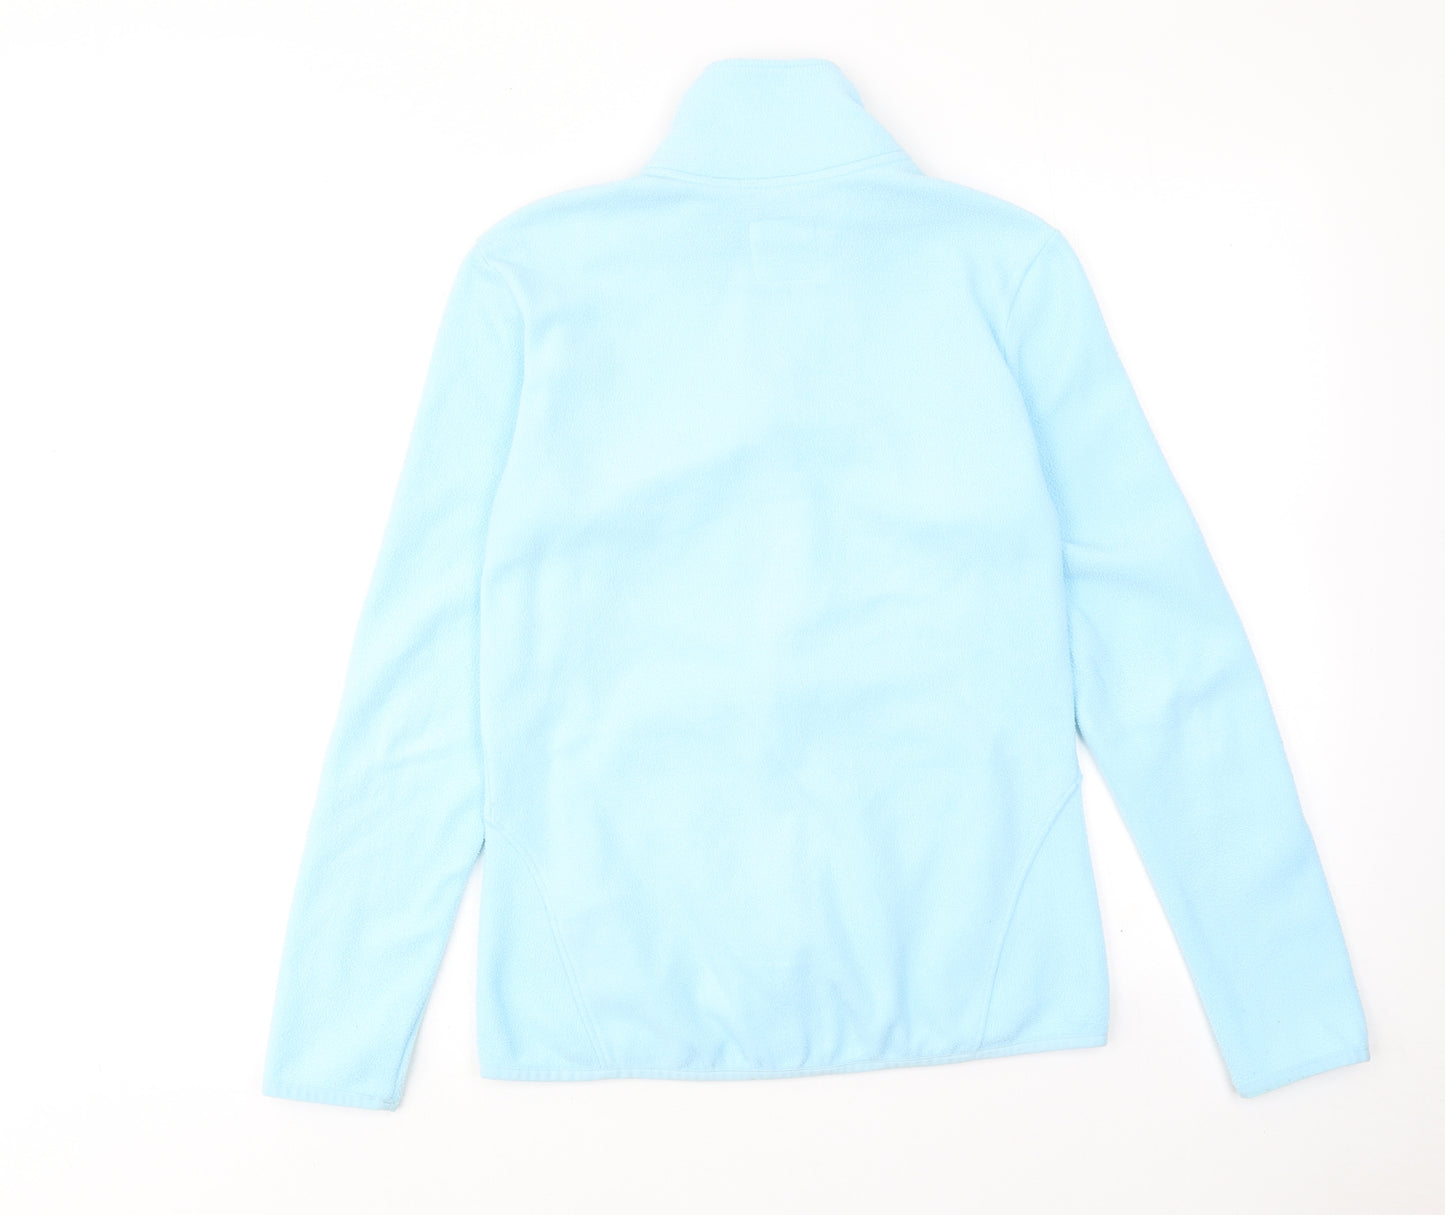 GOODMOVE Womens Blue Jacket Size 8 Zip